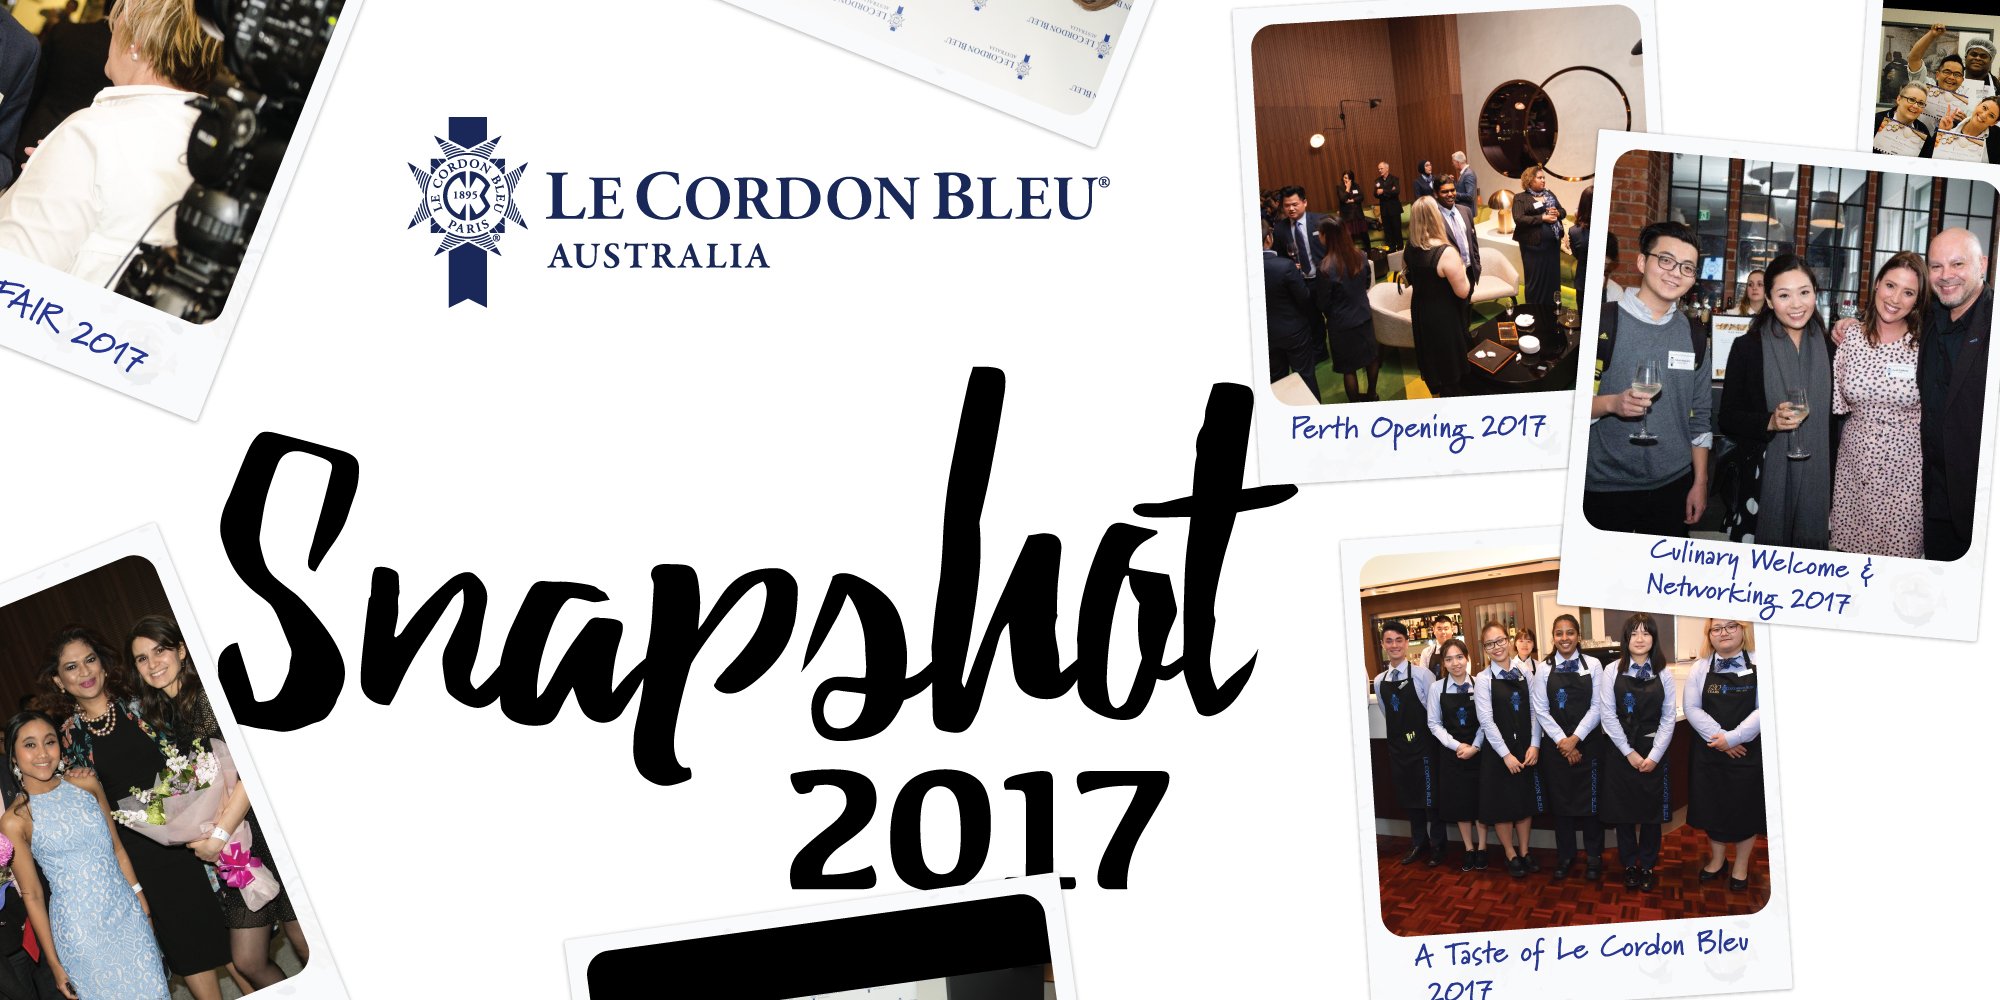 Le Cordon Bleu Australia: Snapshot 2017